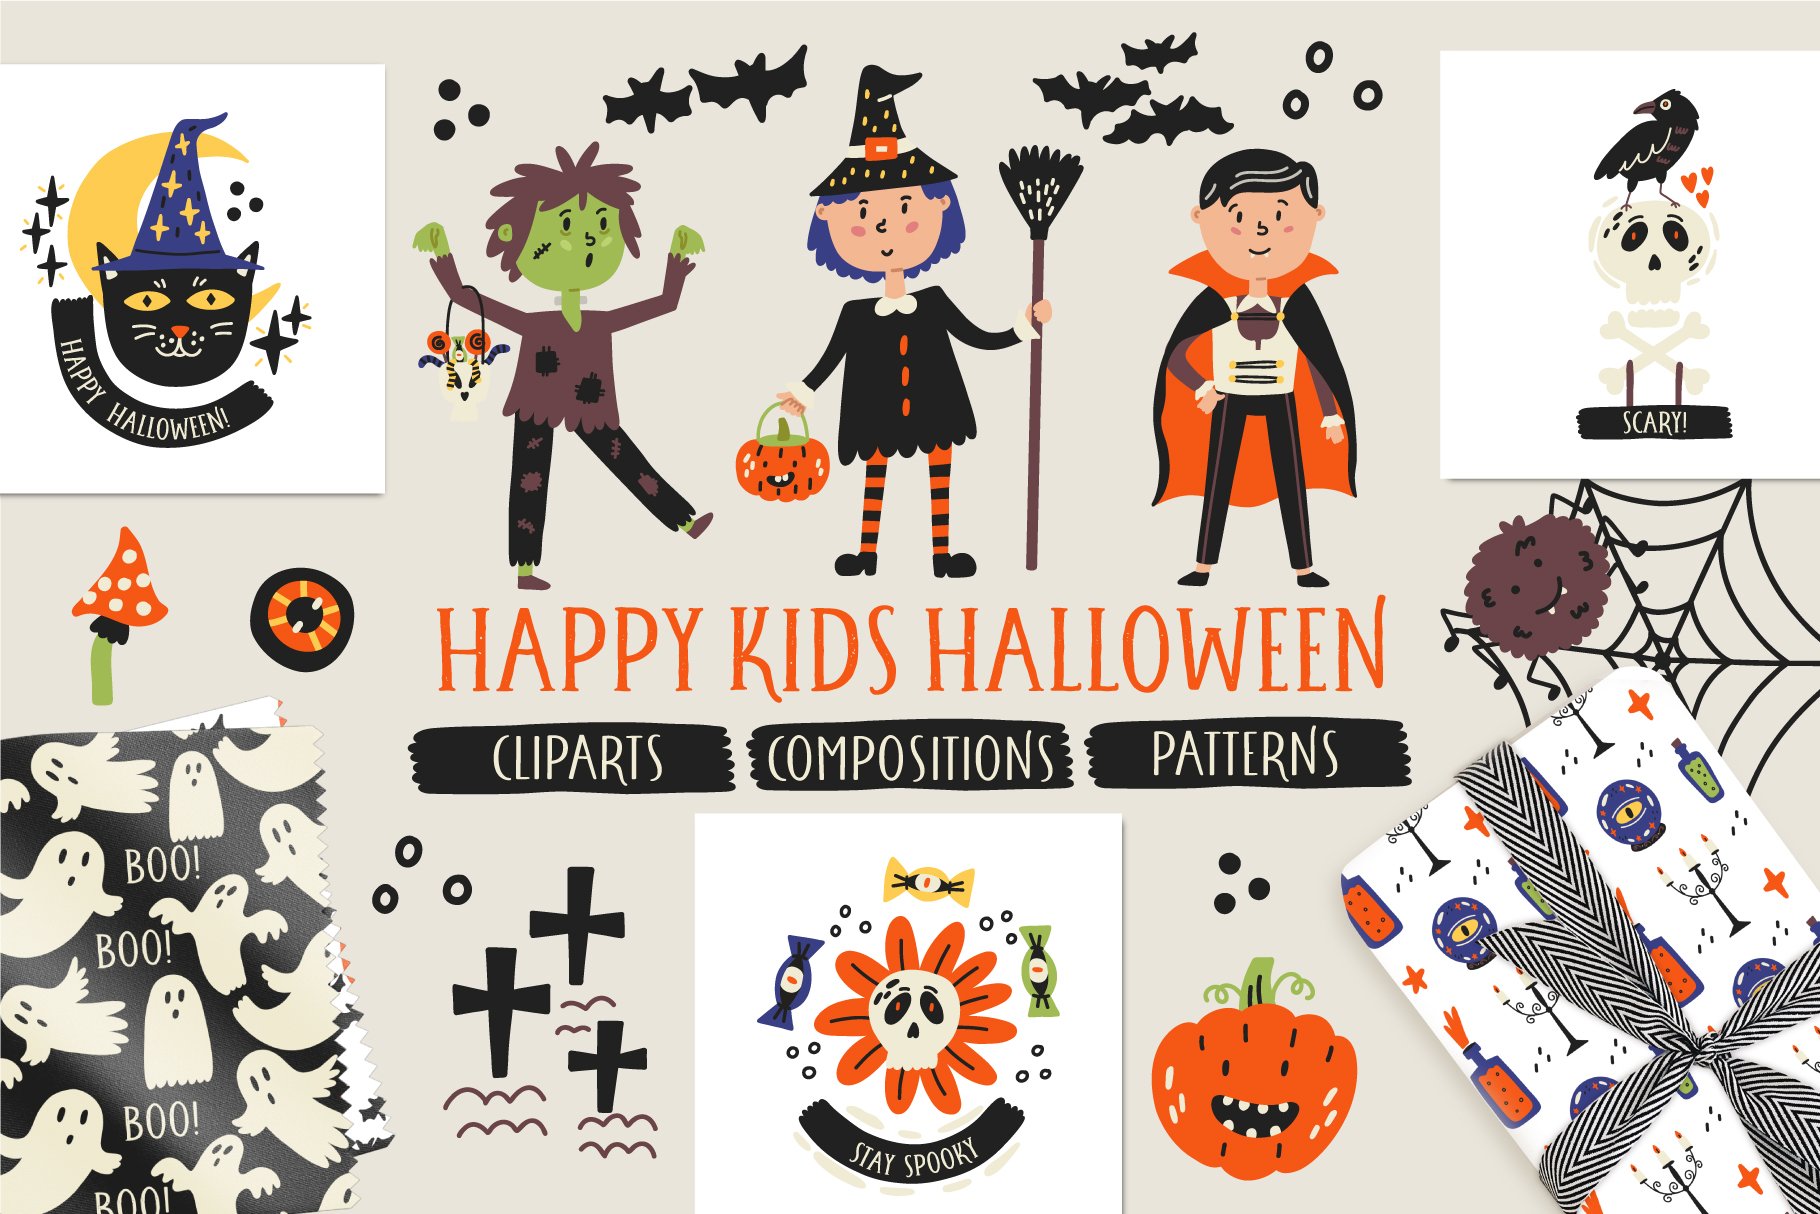 Happy Kids Halloween cover image.